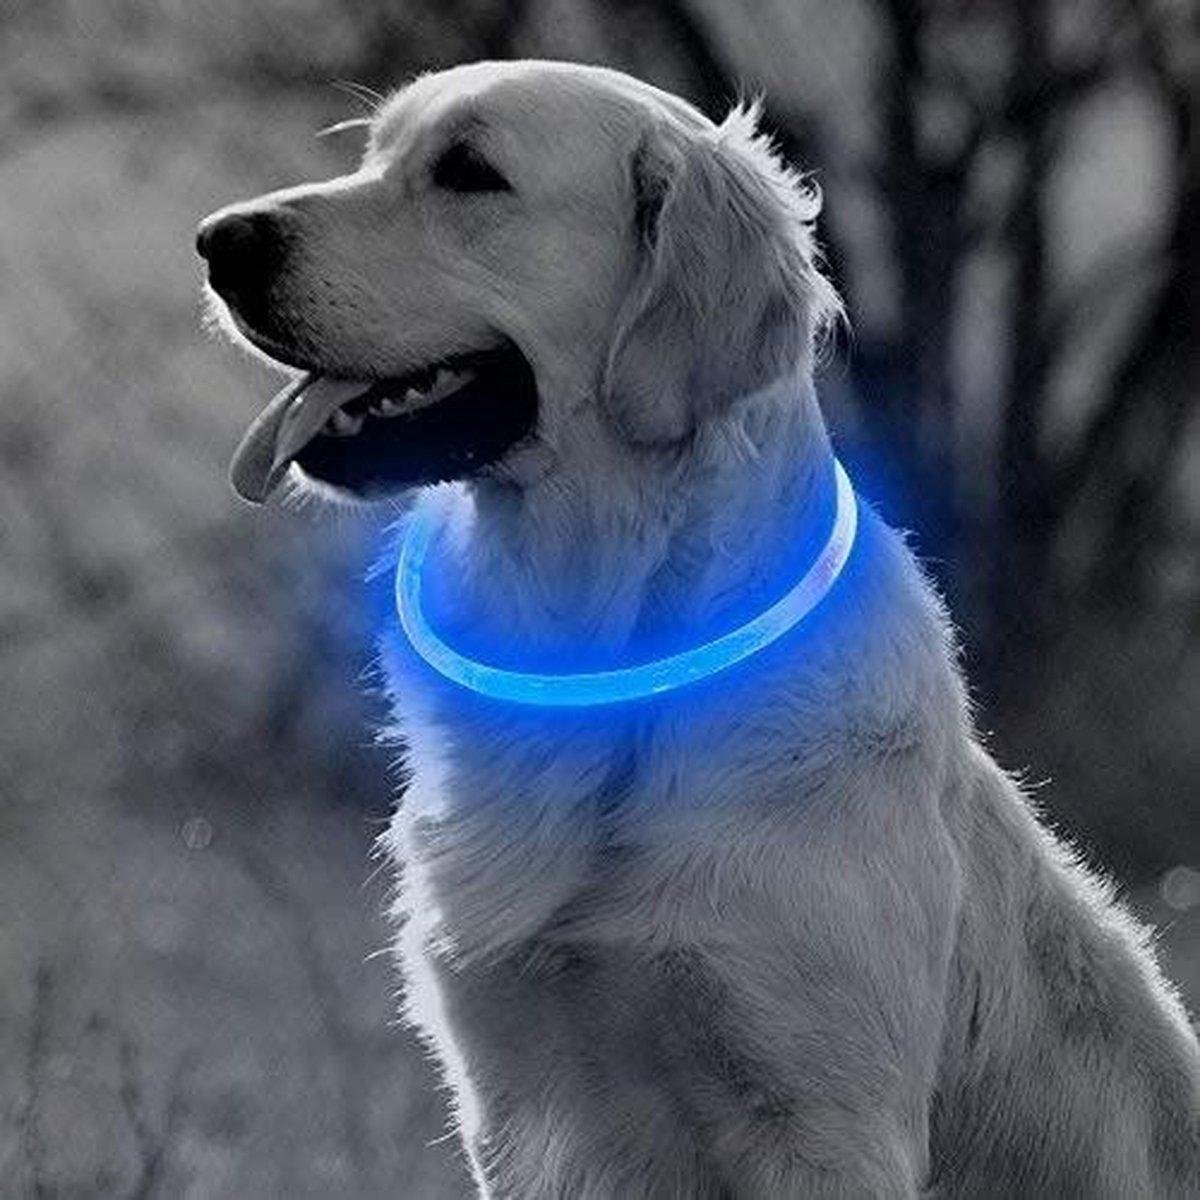 LED Halsband Hond - Lichtgevende Halsband Hond - Blauw - XL - USB Oplaadbaar - Professor Q